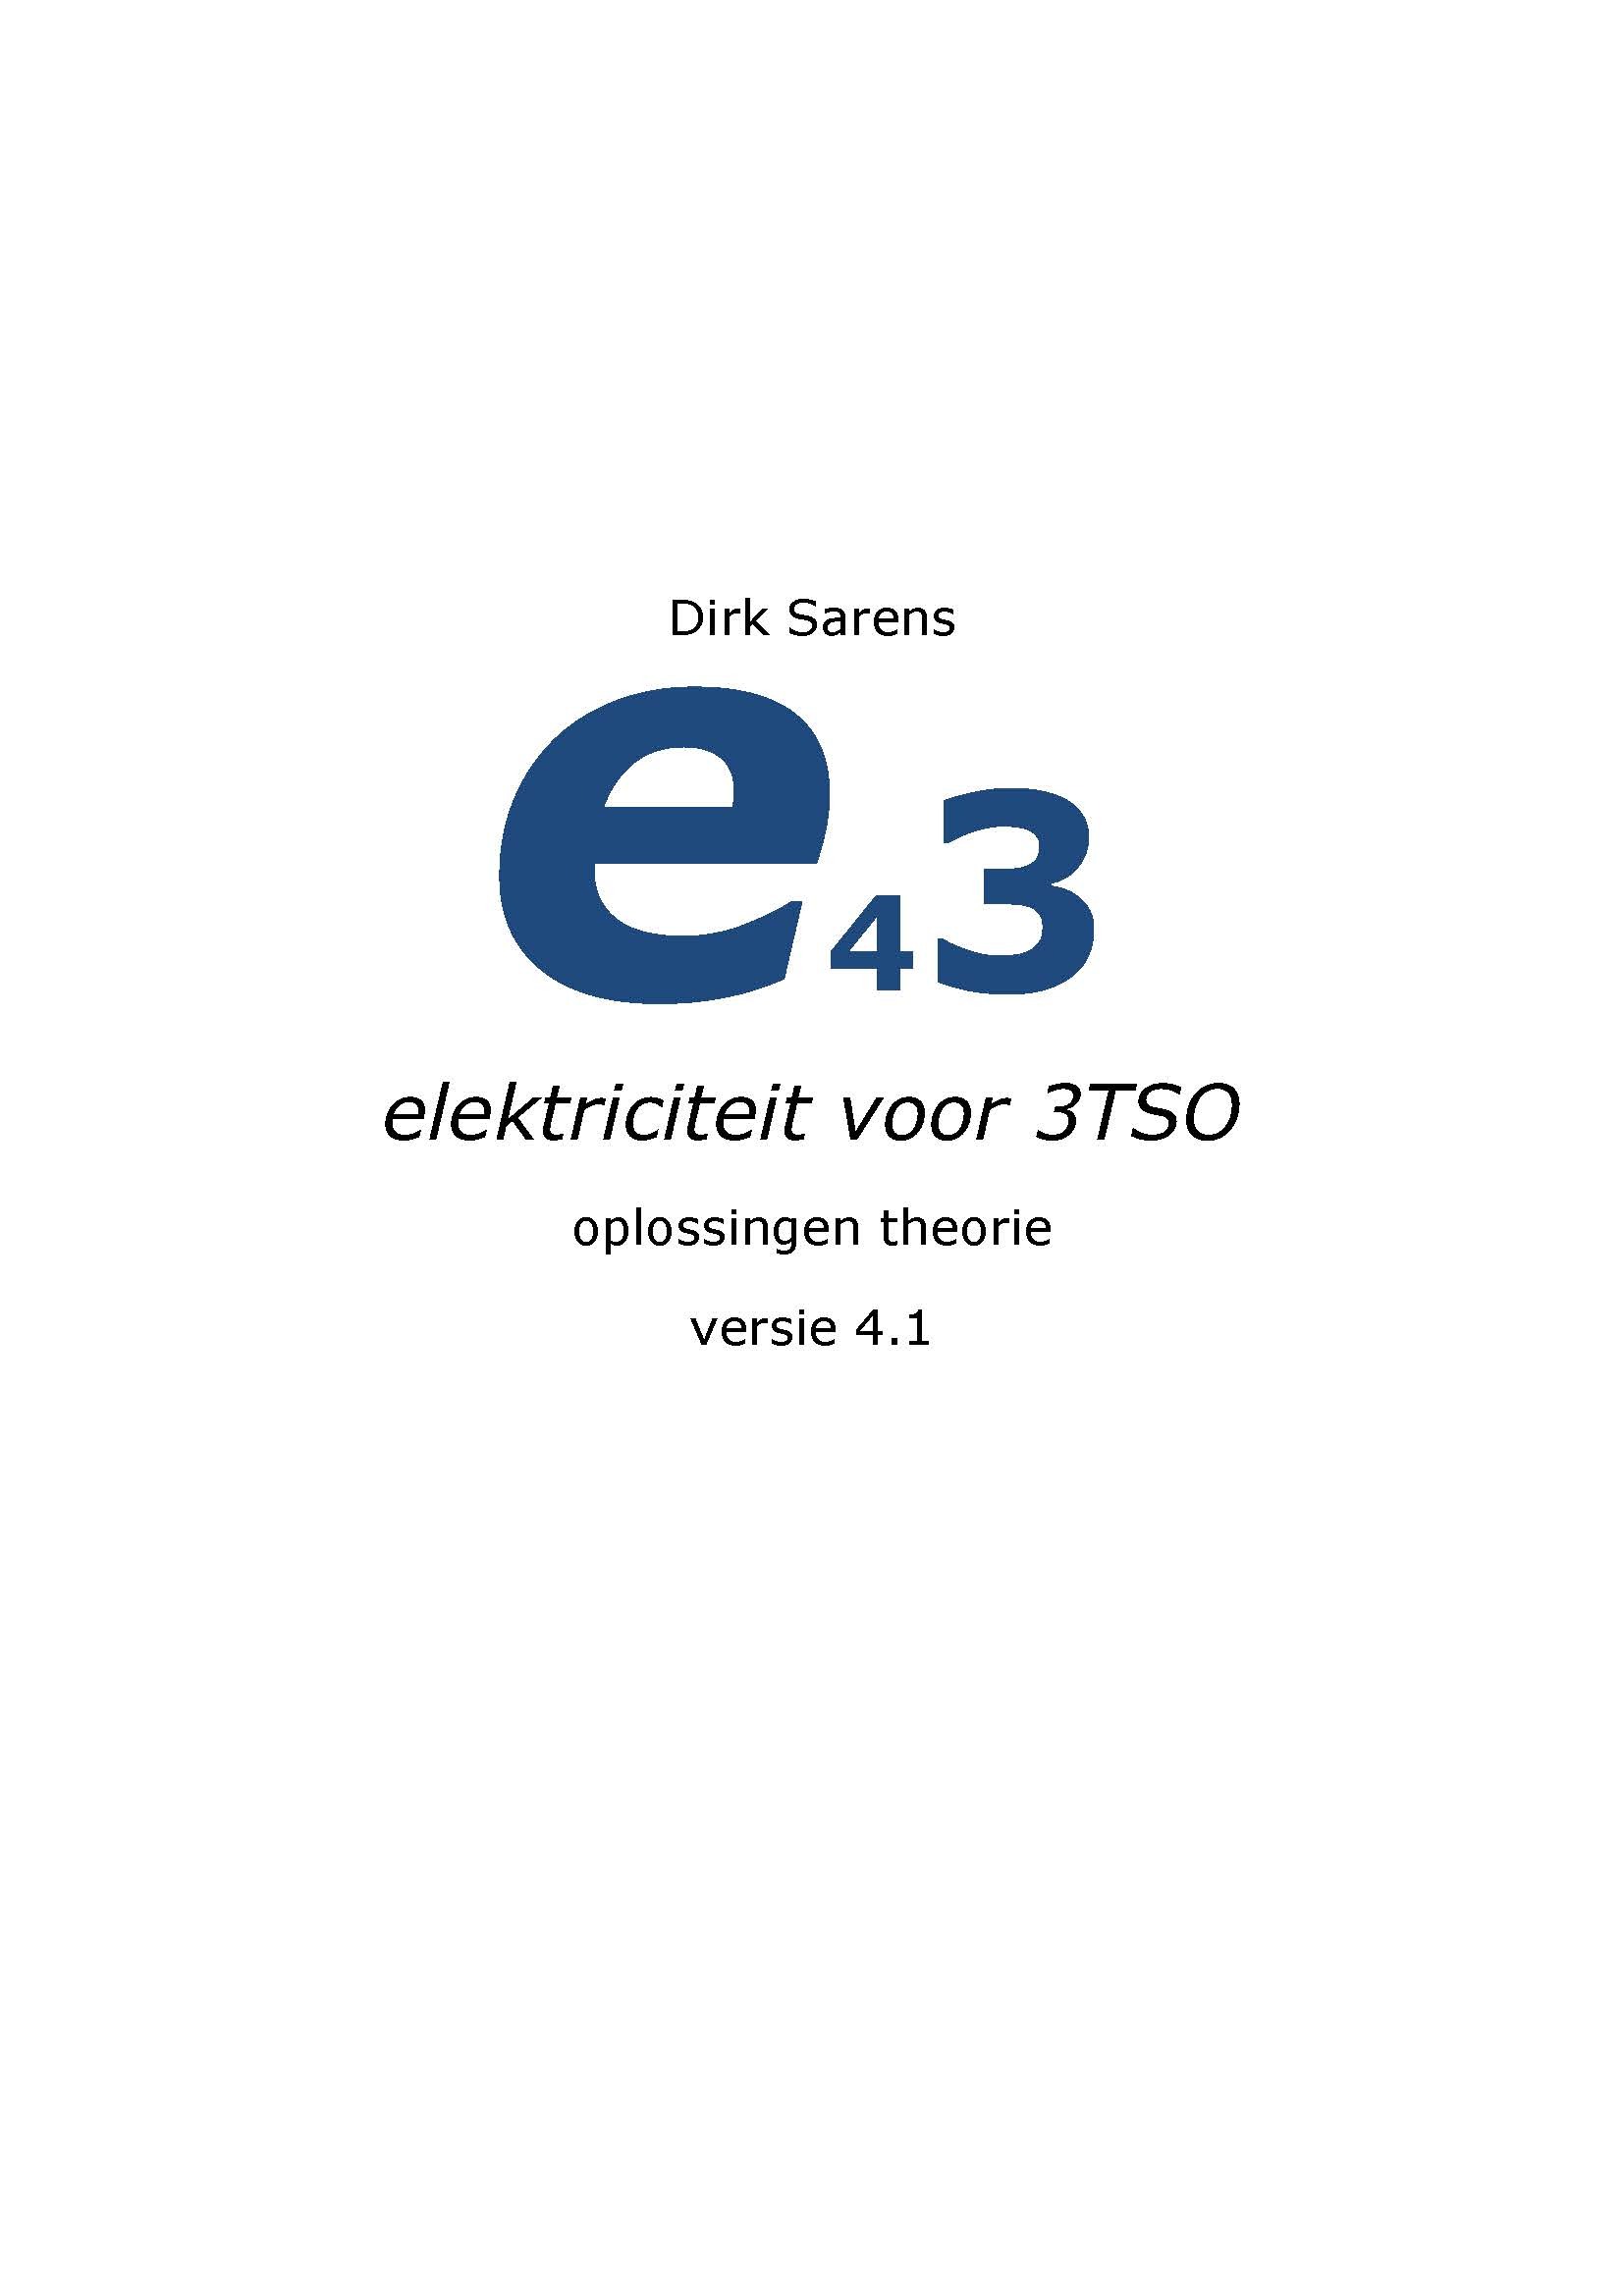 e43 elektriciteit voor 3TSO oplossing theorie versie 4.1